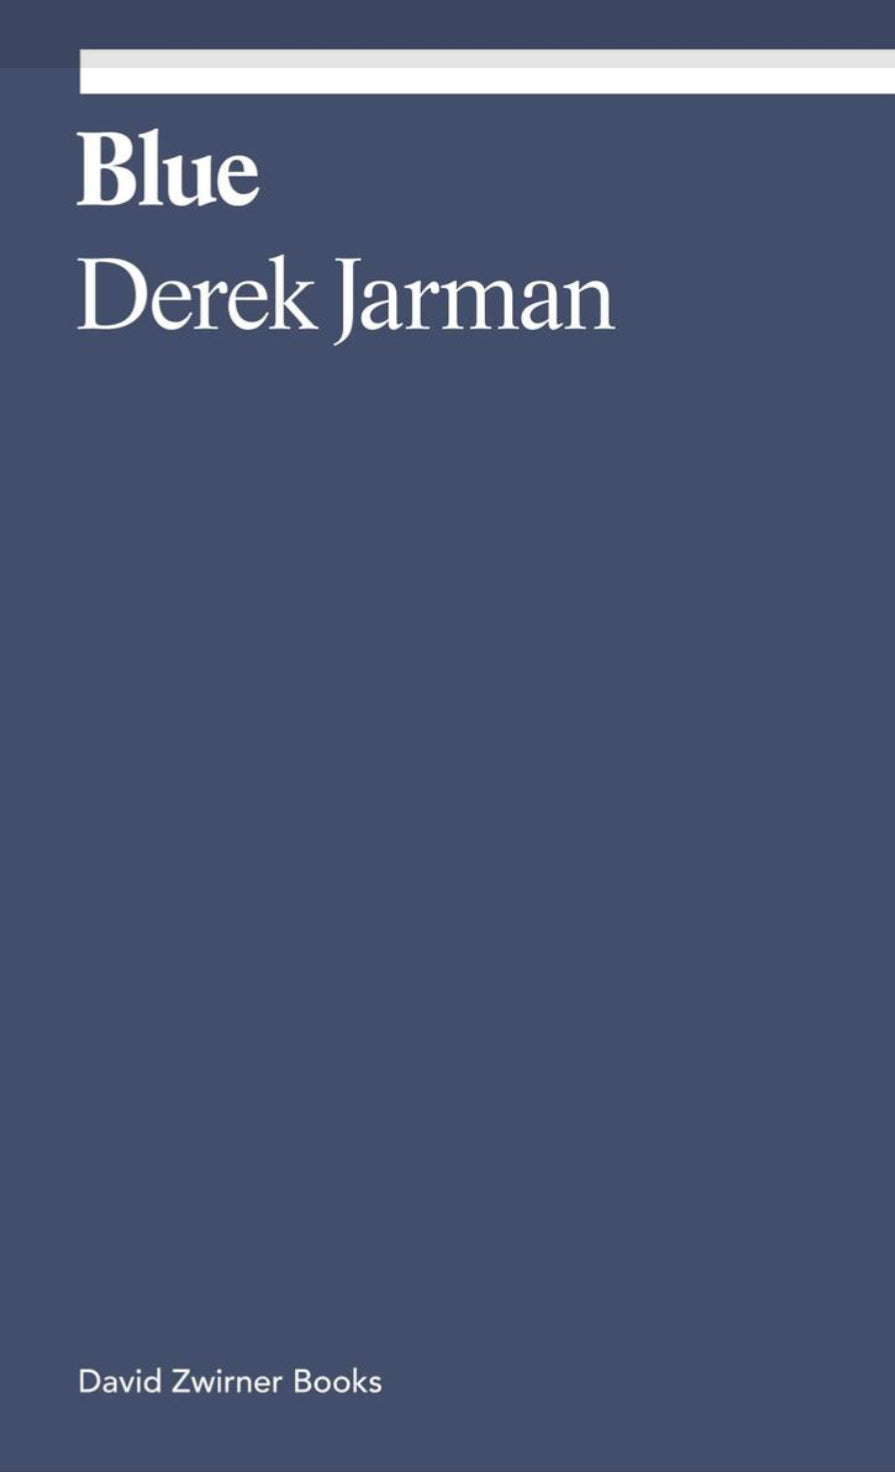 Basket Books: “Blue” by Derek Jarman